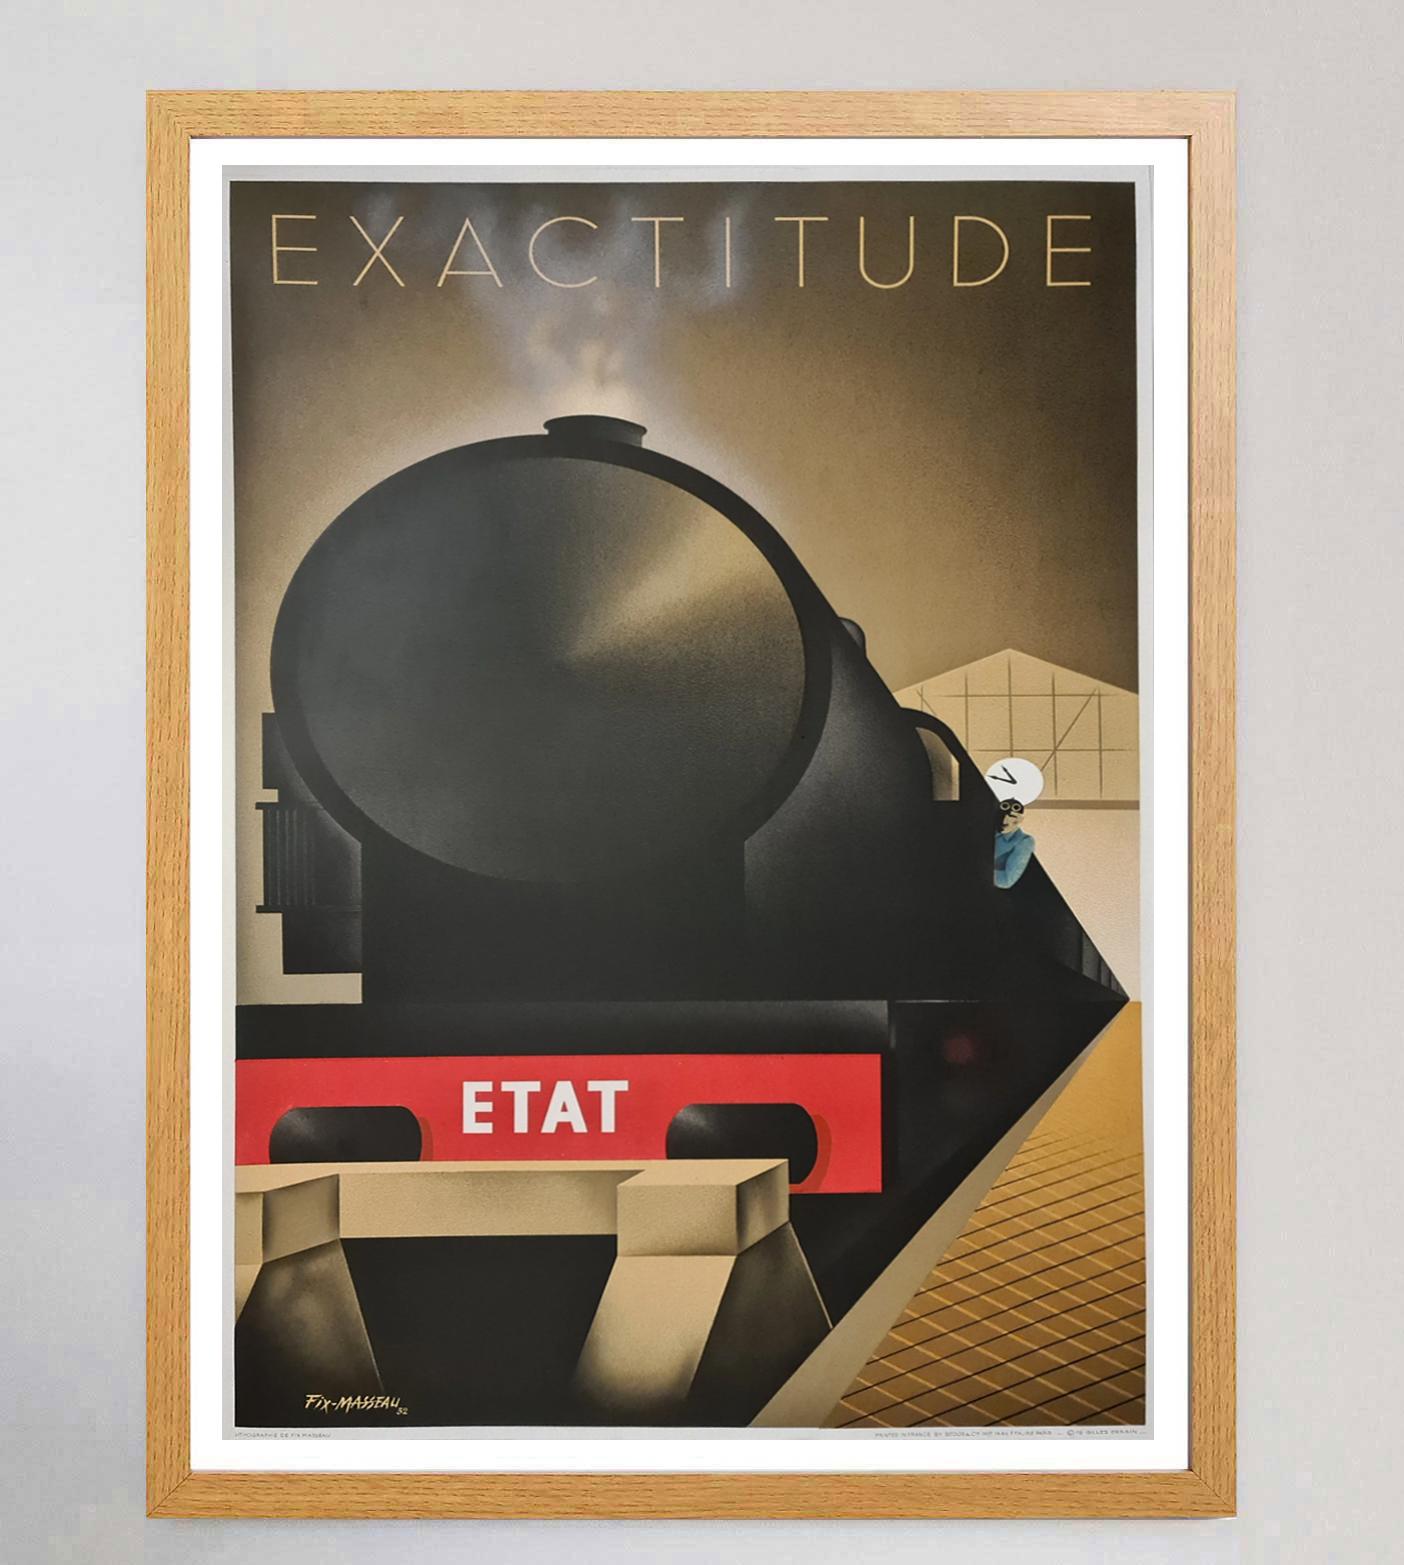 French 1982 Exactitude - Fix-Masseau Original Vintage Poster For Sale